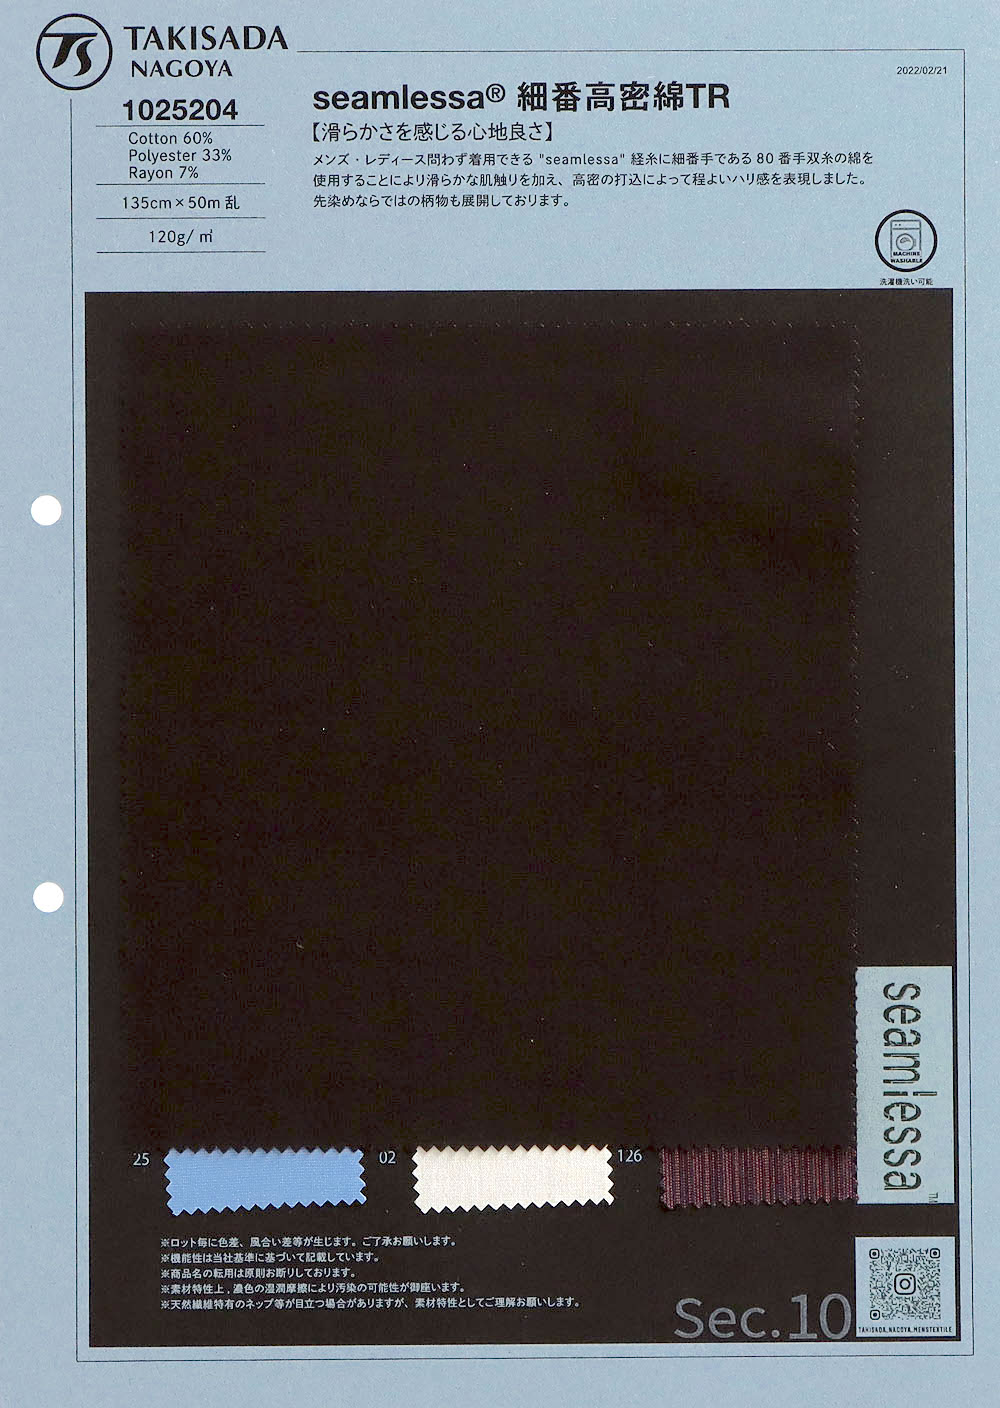 1025204 Seamlessa (R) Algodón De Alta Densidad Número Fino TR[Fabrica Textil] Takisada Nagoya